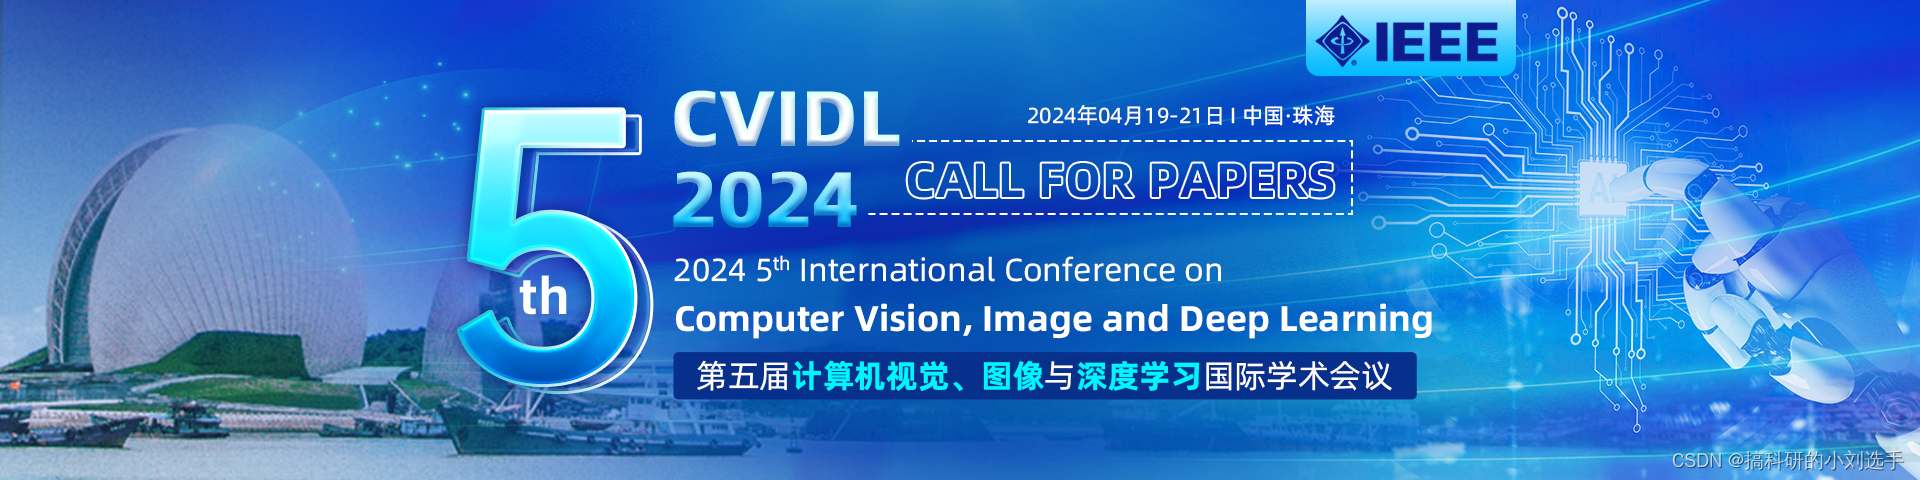 【IEEE会议征稿通知】第五届计算机视觉、图像与深度学习国际学术会议（CVIDL 2024）